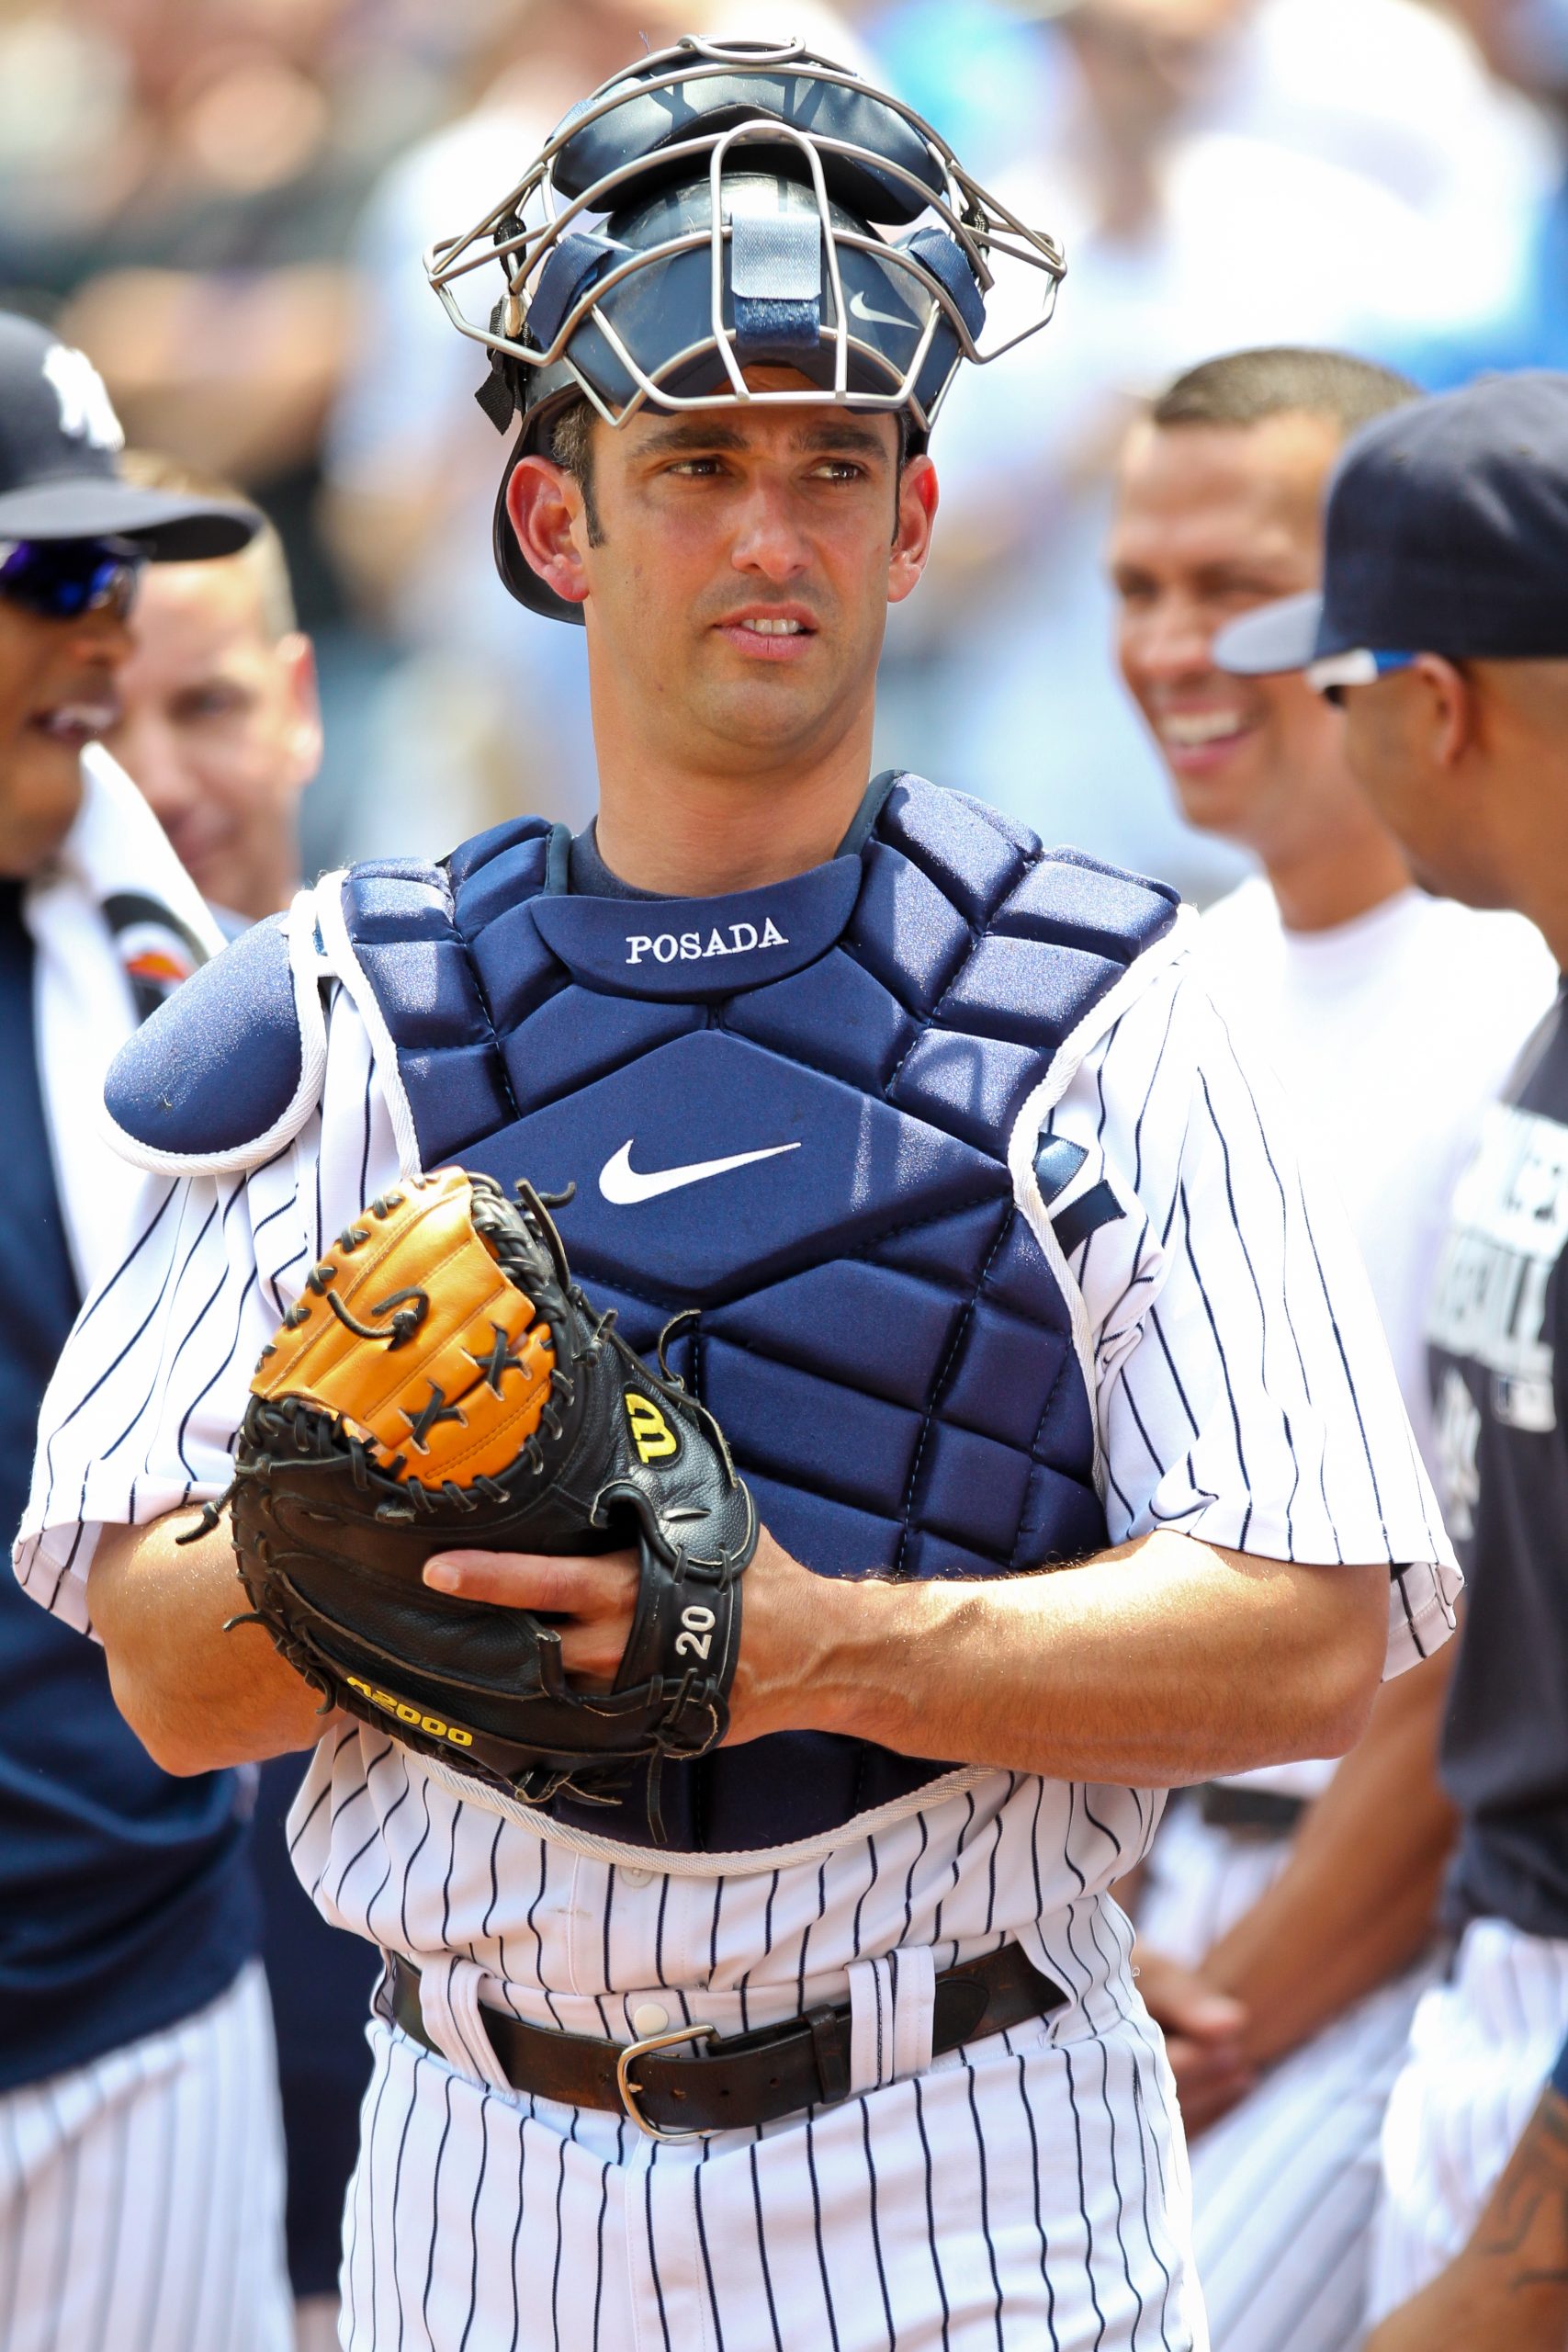 Jorge Posada-Retired New York Yankees Catcher Lists $20 Million Coral Gables Mansion